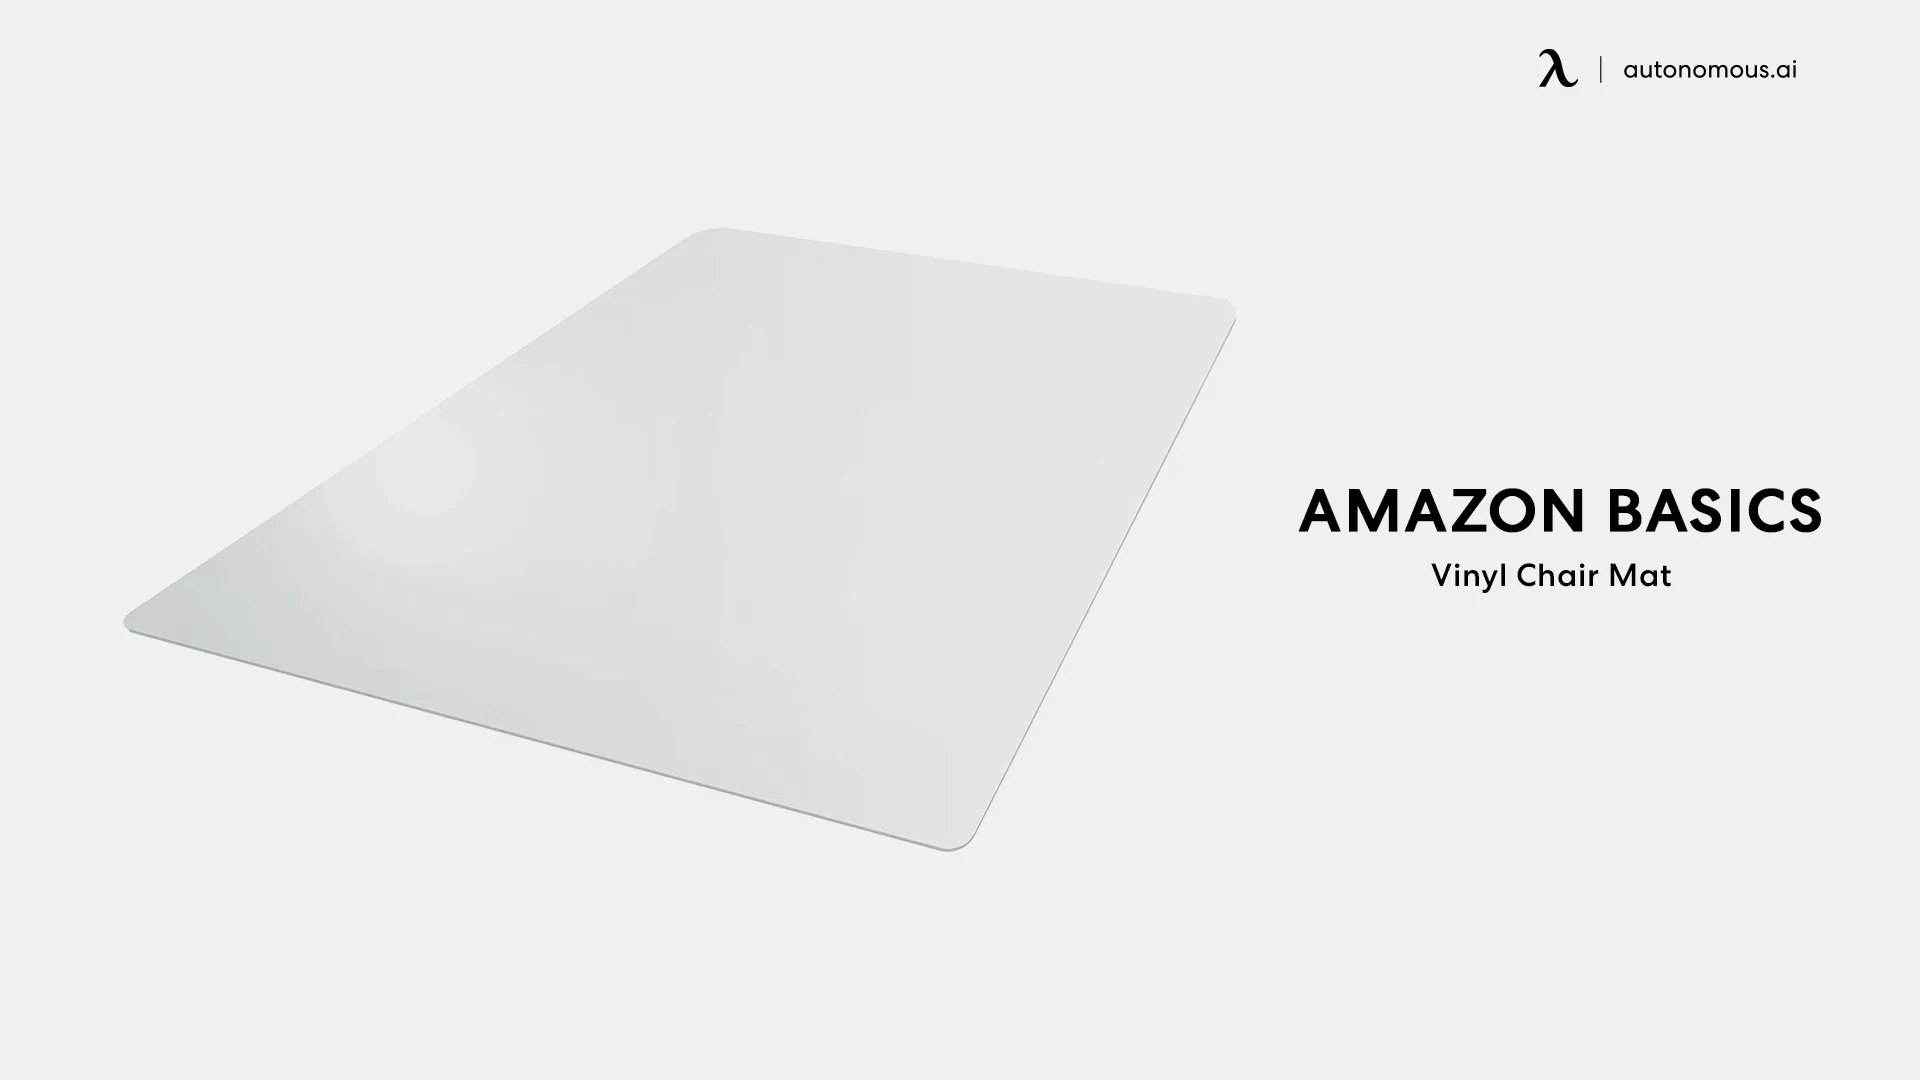 Amazon Basics Vinyl Chair Mat